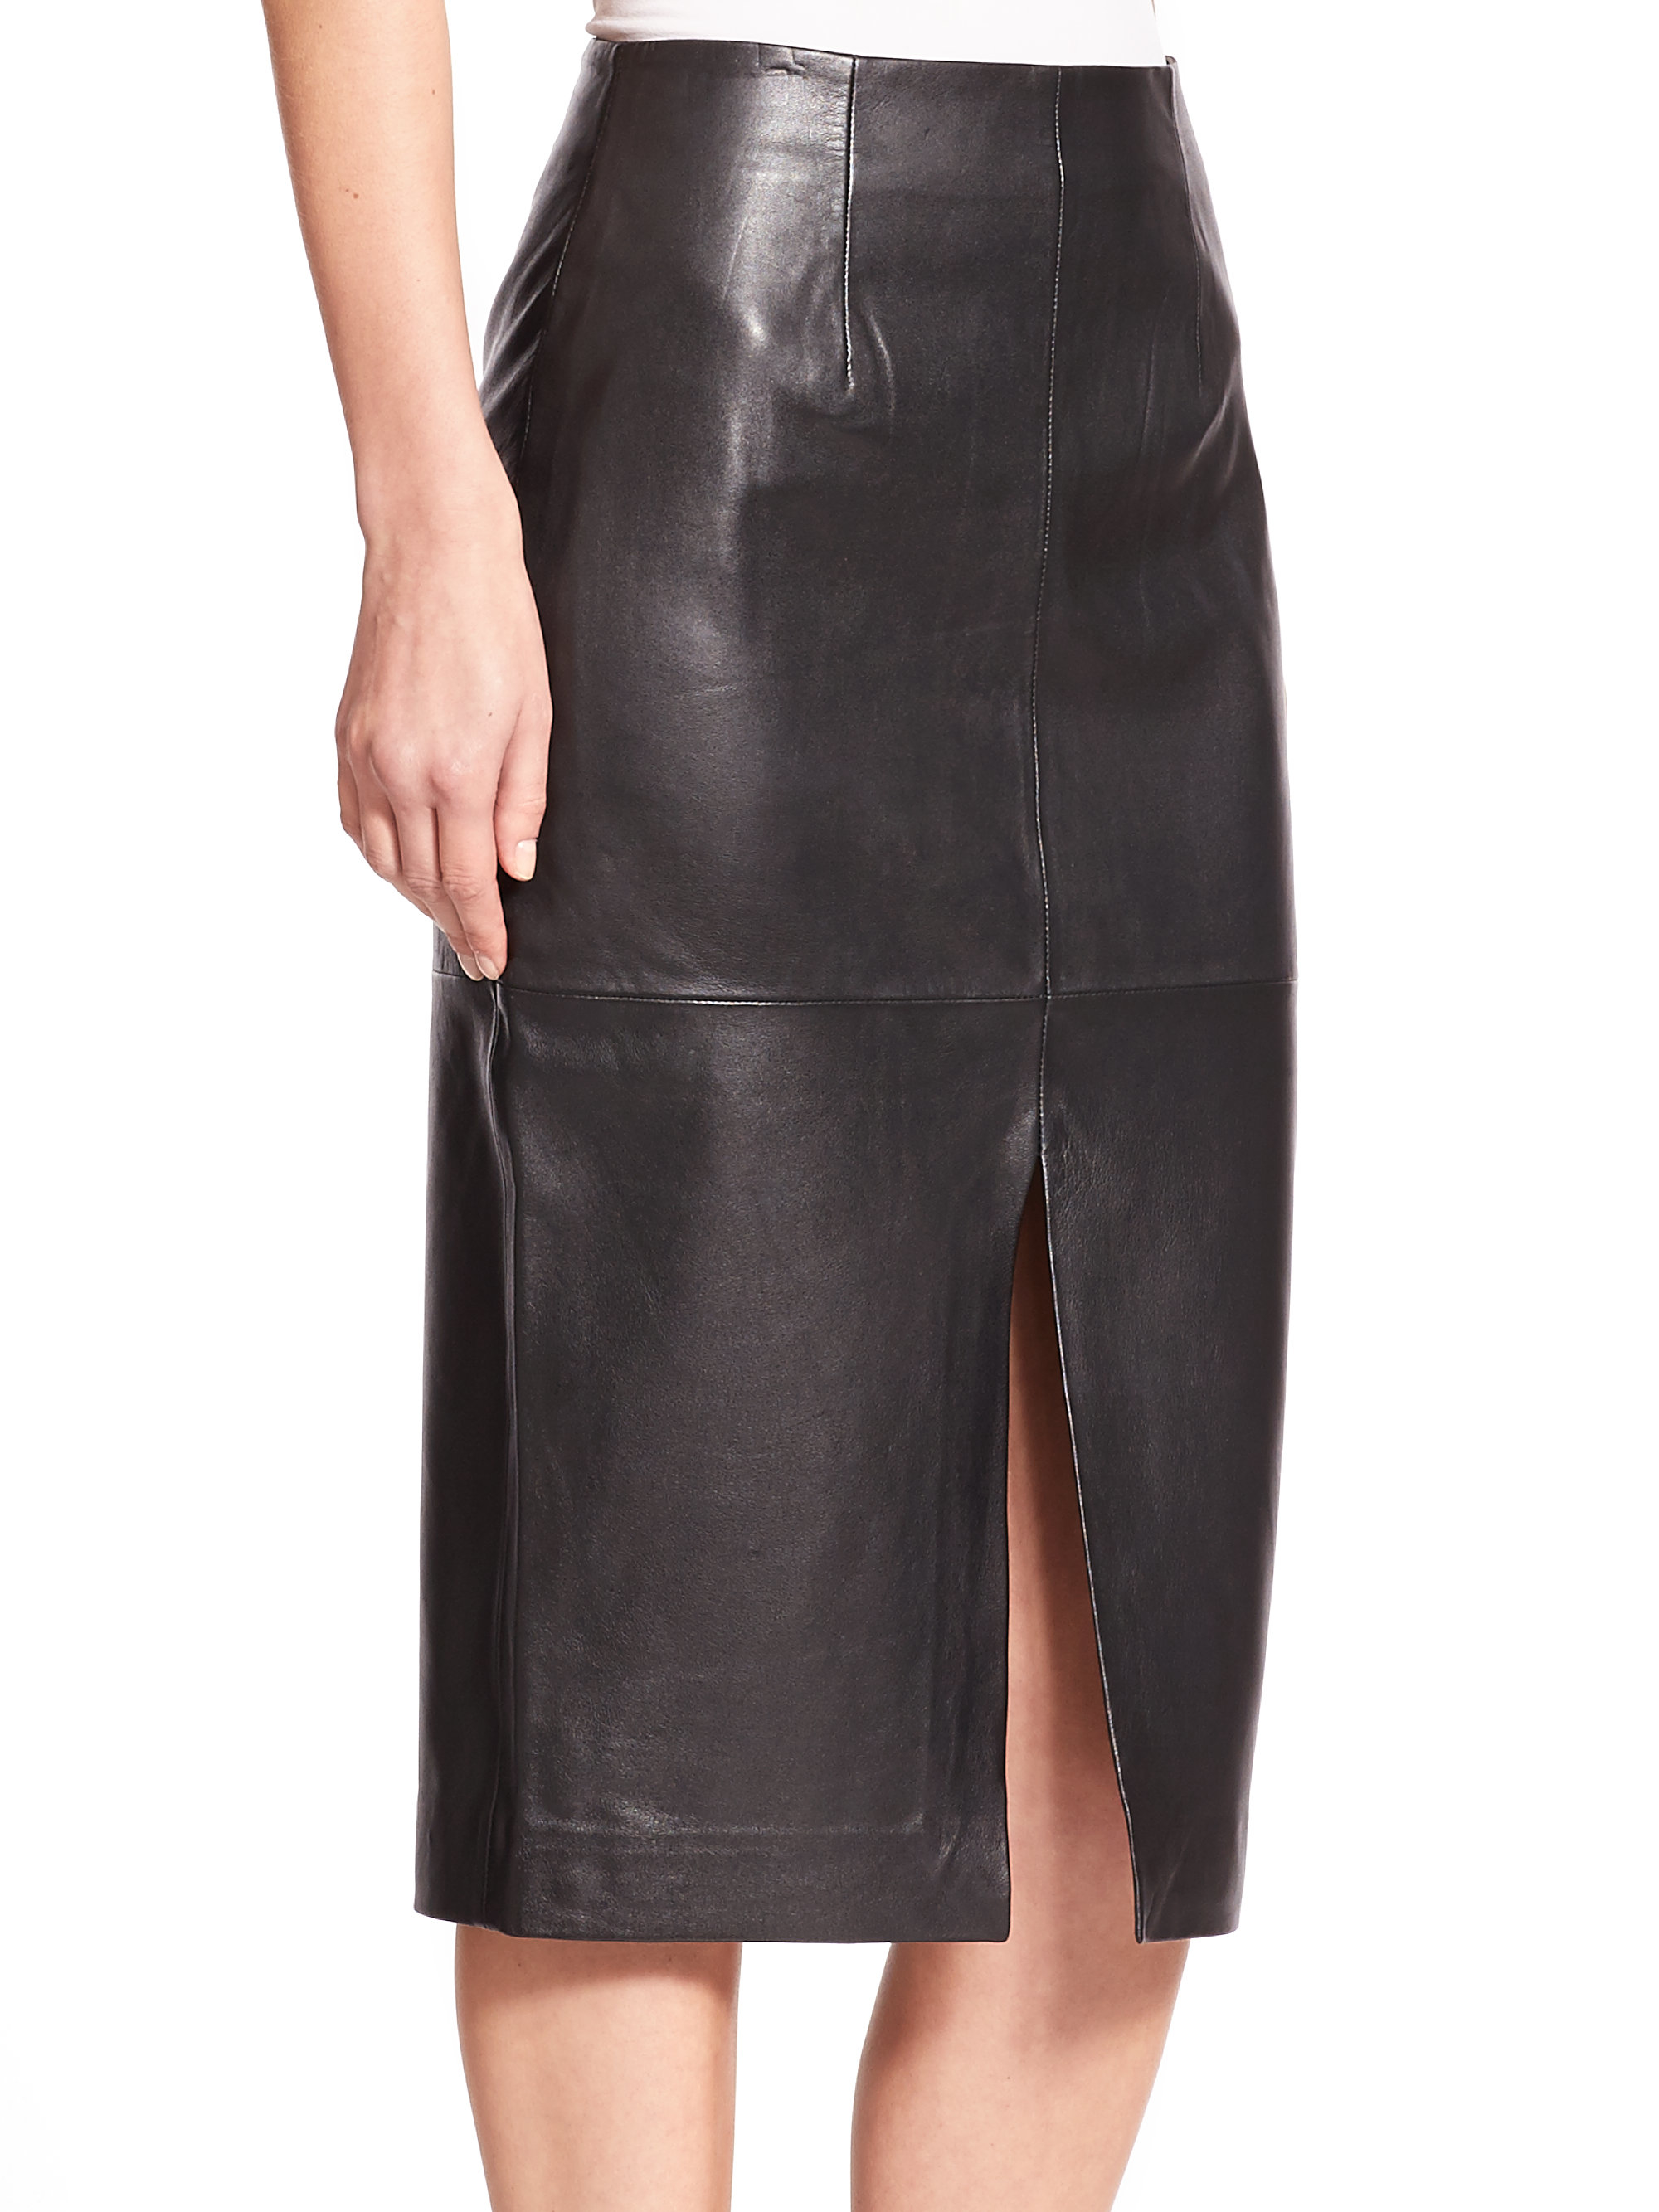 Lyst - Nicholas Leather Slit Pencil Skirt in Black